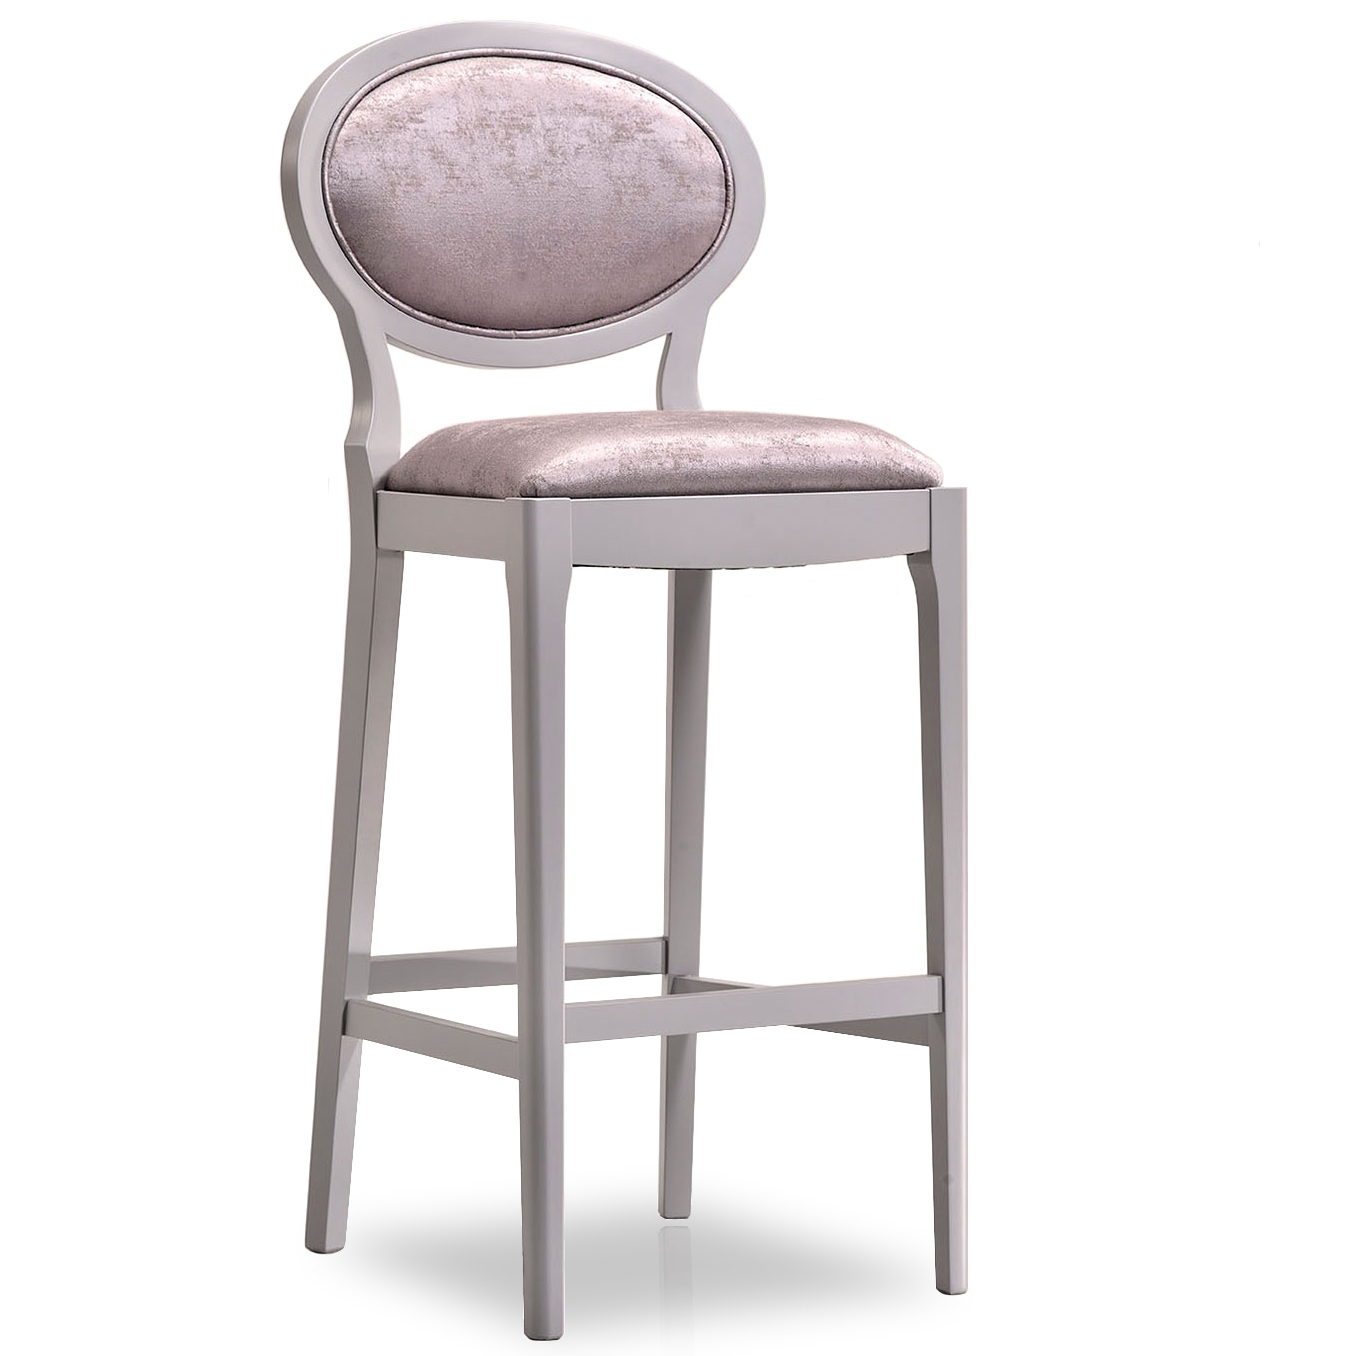 Grey and lilac bar stool